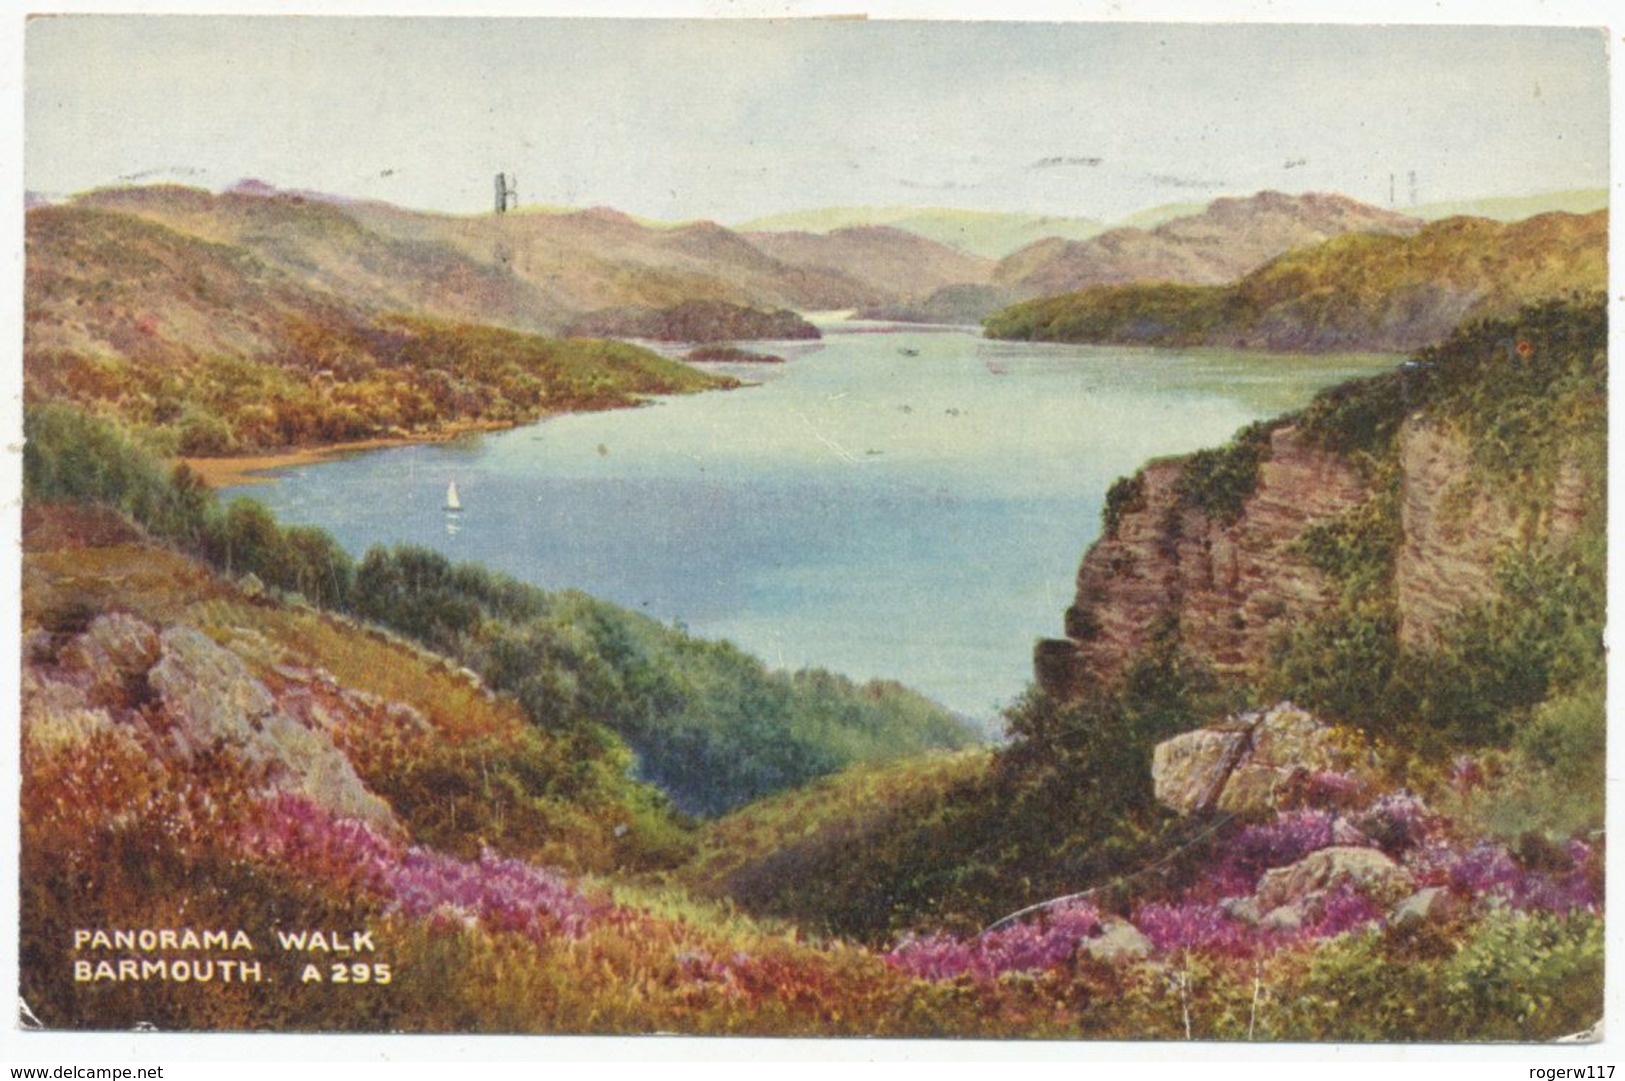 Panorama Walk, Barmouth, 1955 Postcard - Merionethshire